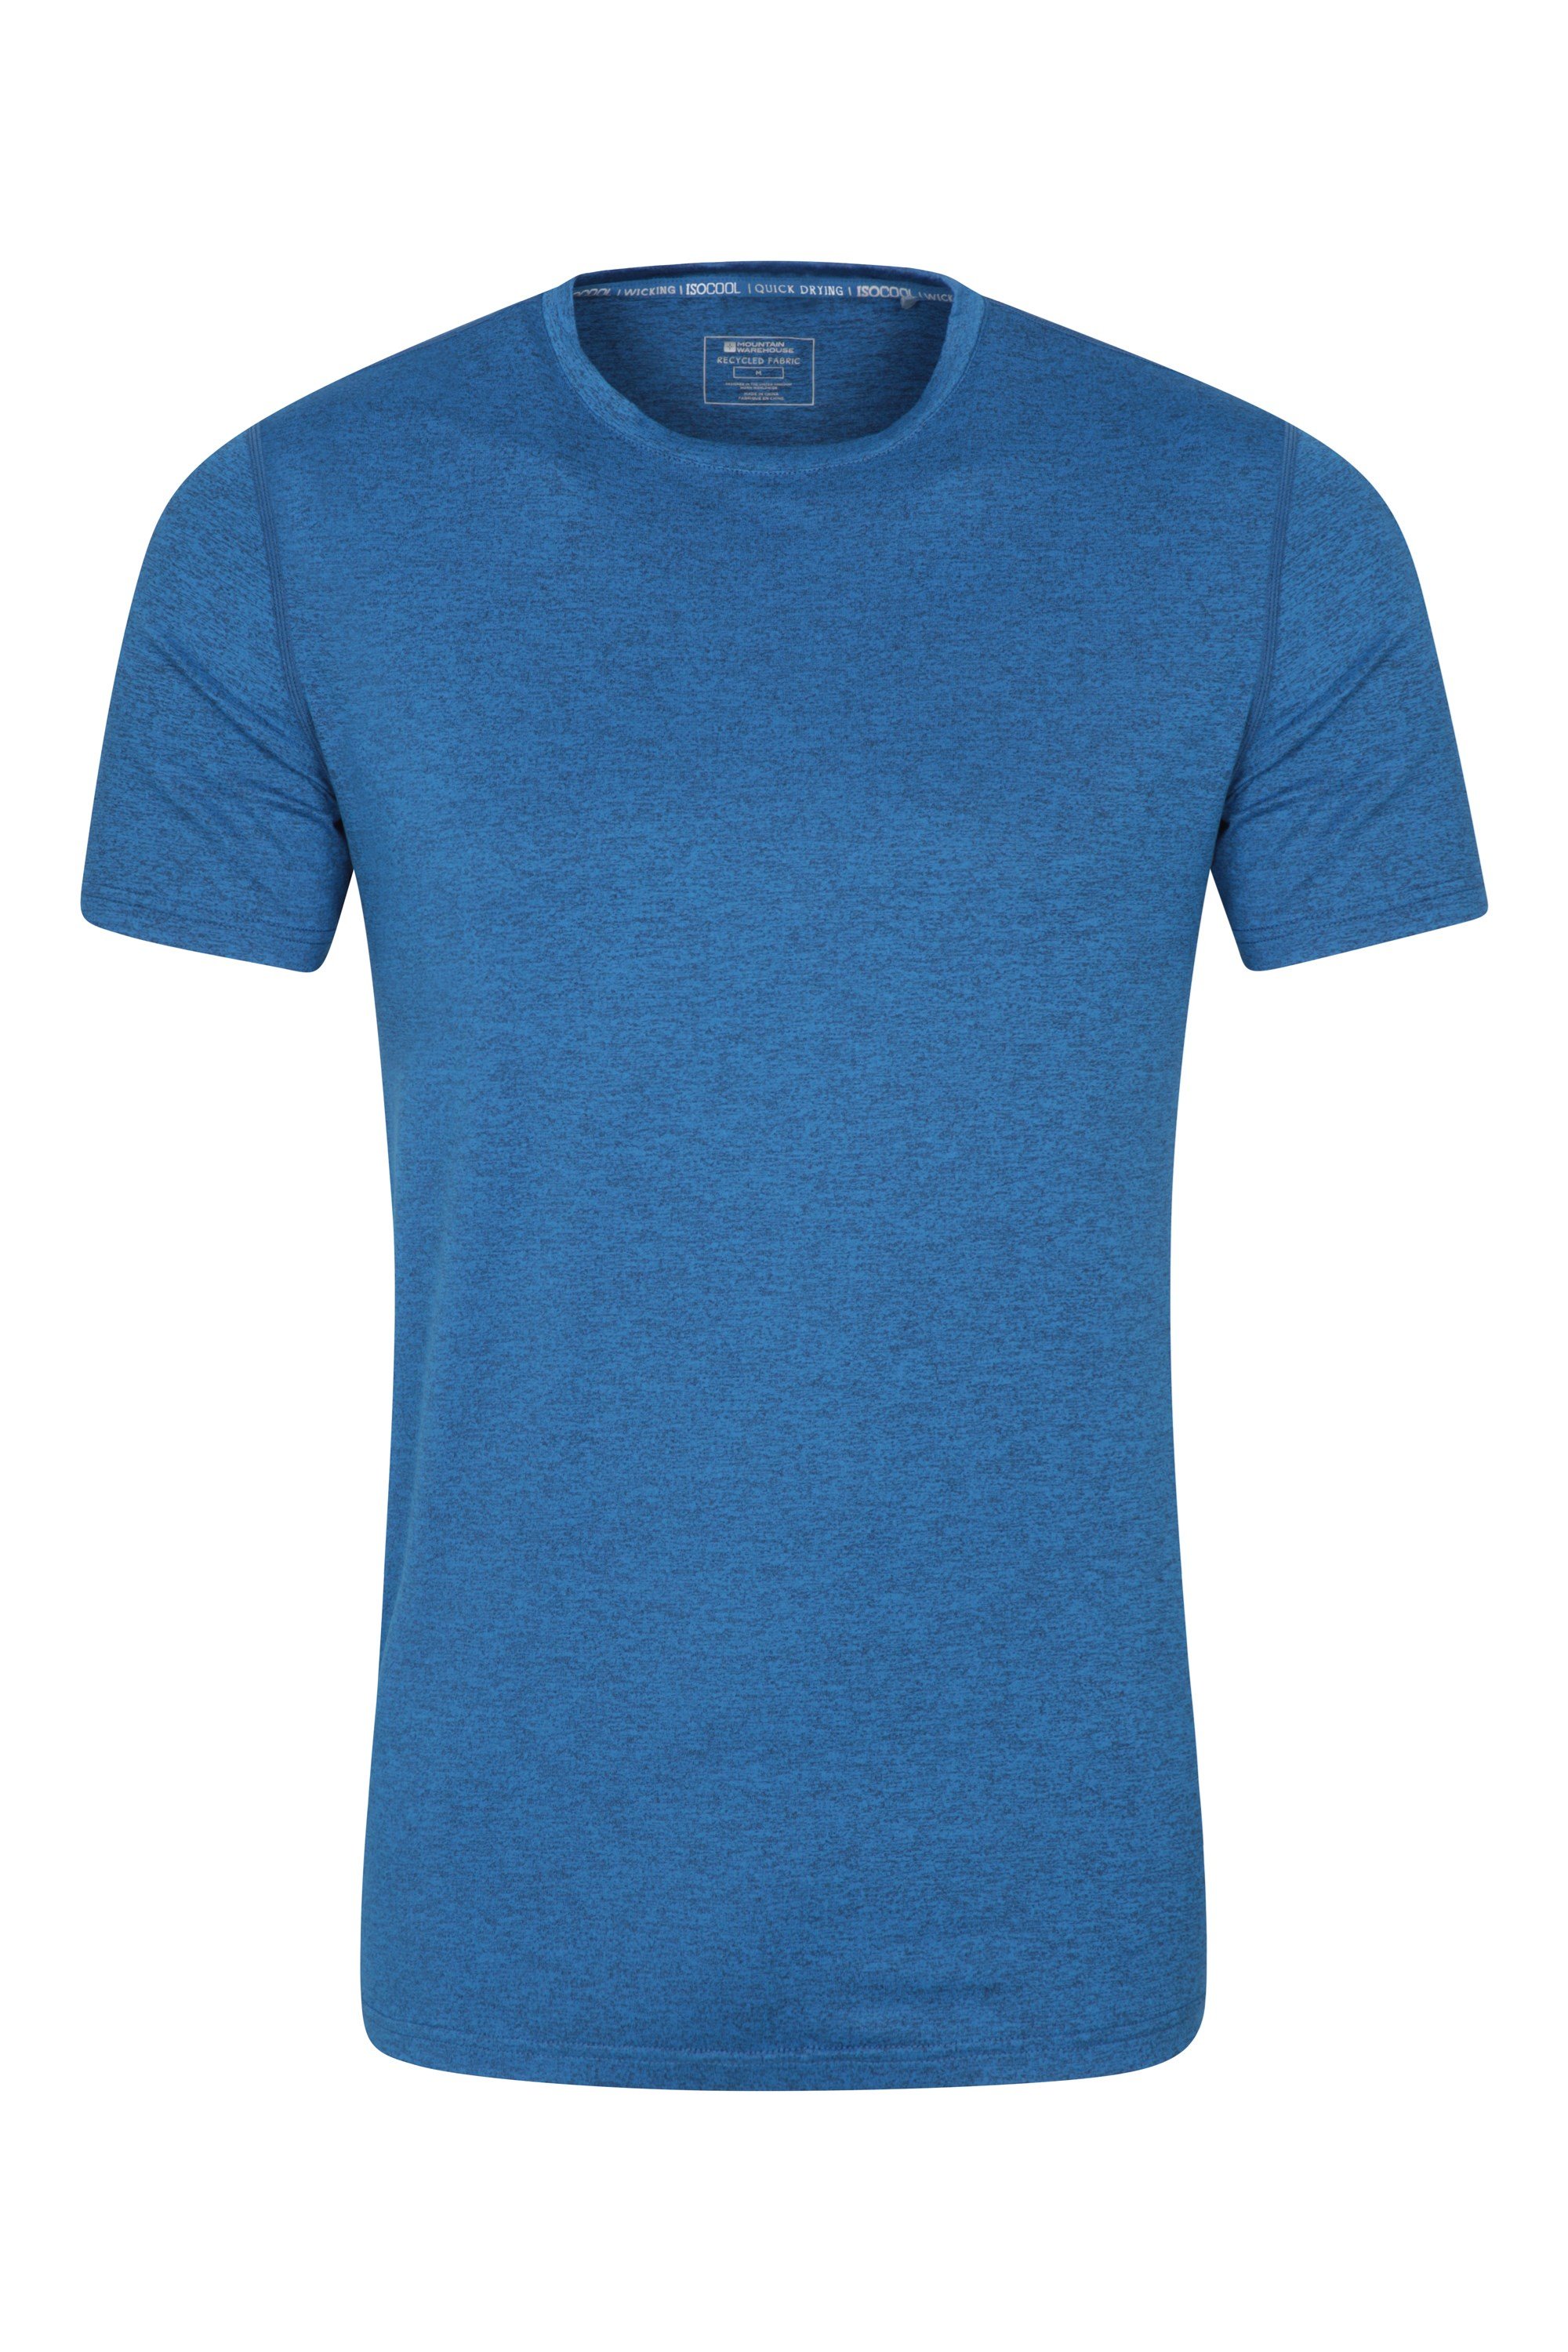 Echo Melange Mens Recycled T-Shirt - Blue